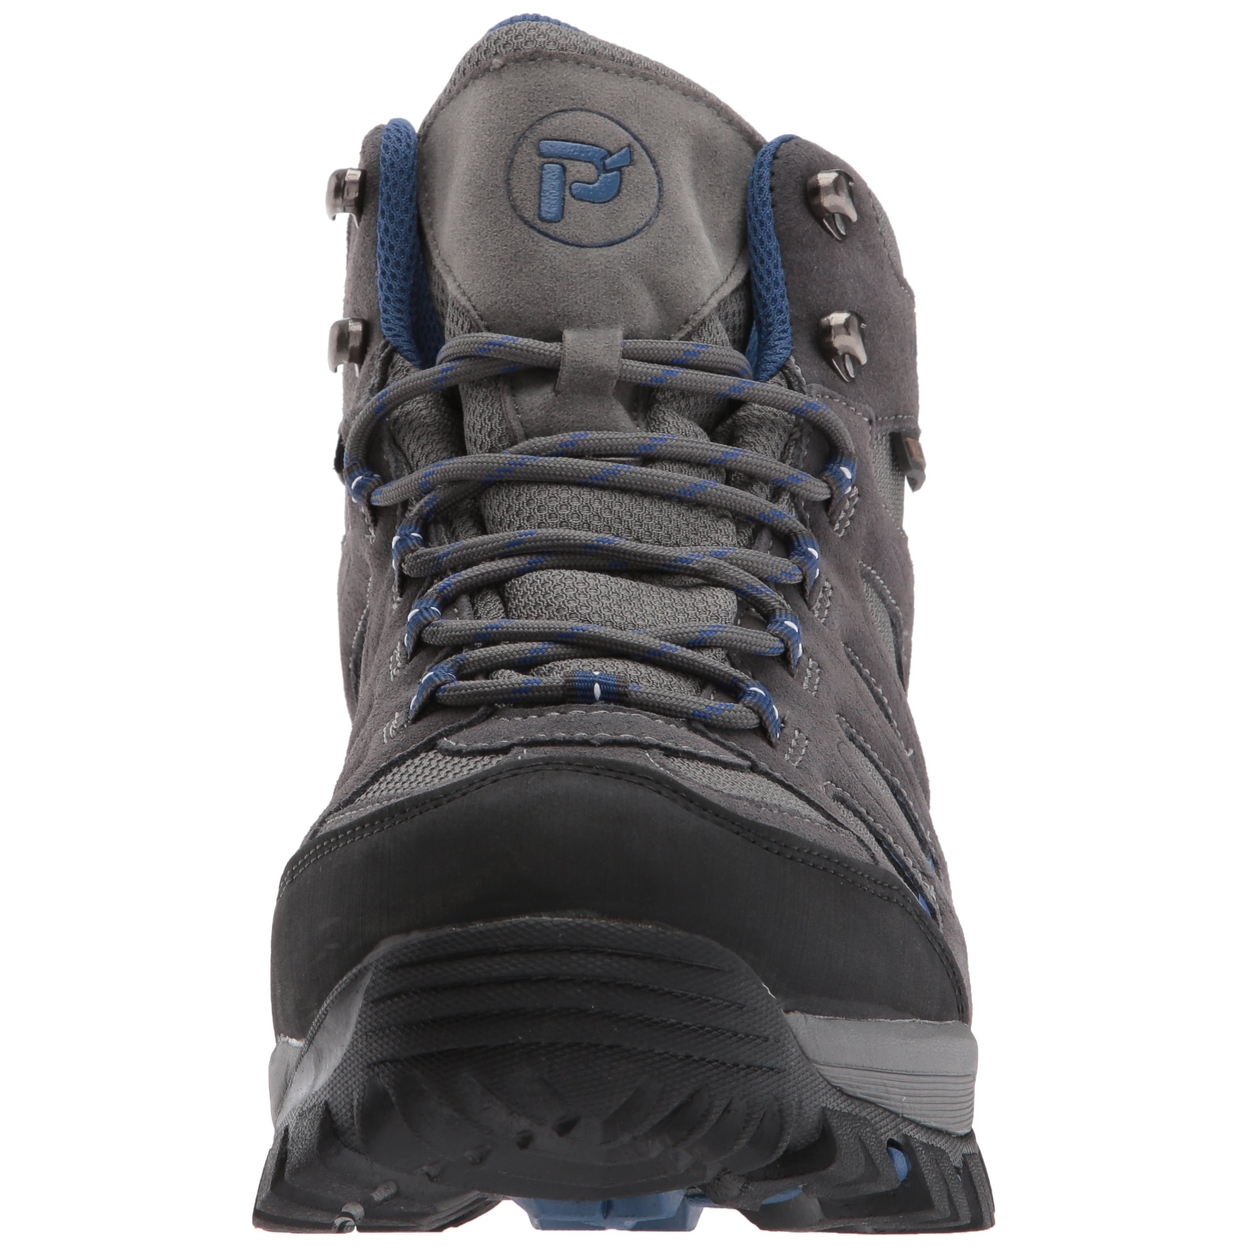 Propet Men's Ridge Walker Hiking Boot Grey/Blue - M3599GRB GREY/BLUE - GREY/BLUE, 9.5-2E